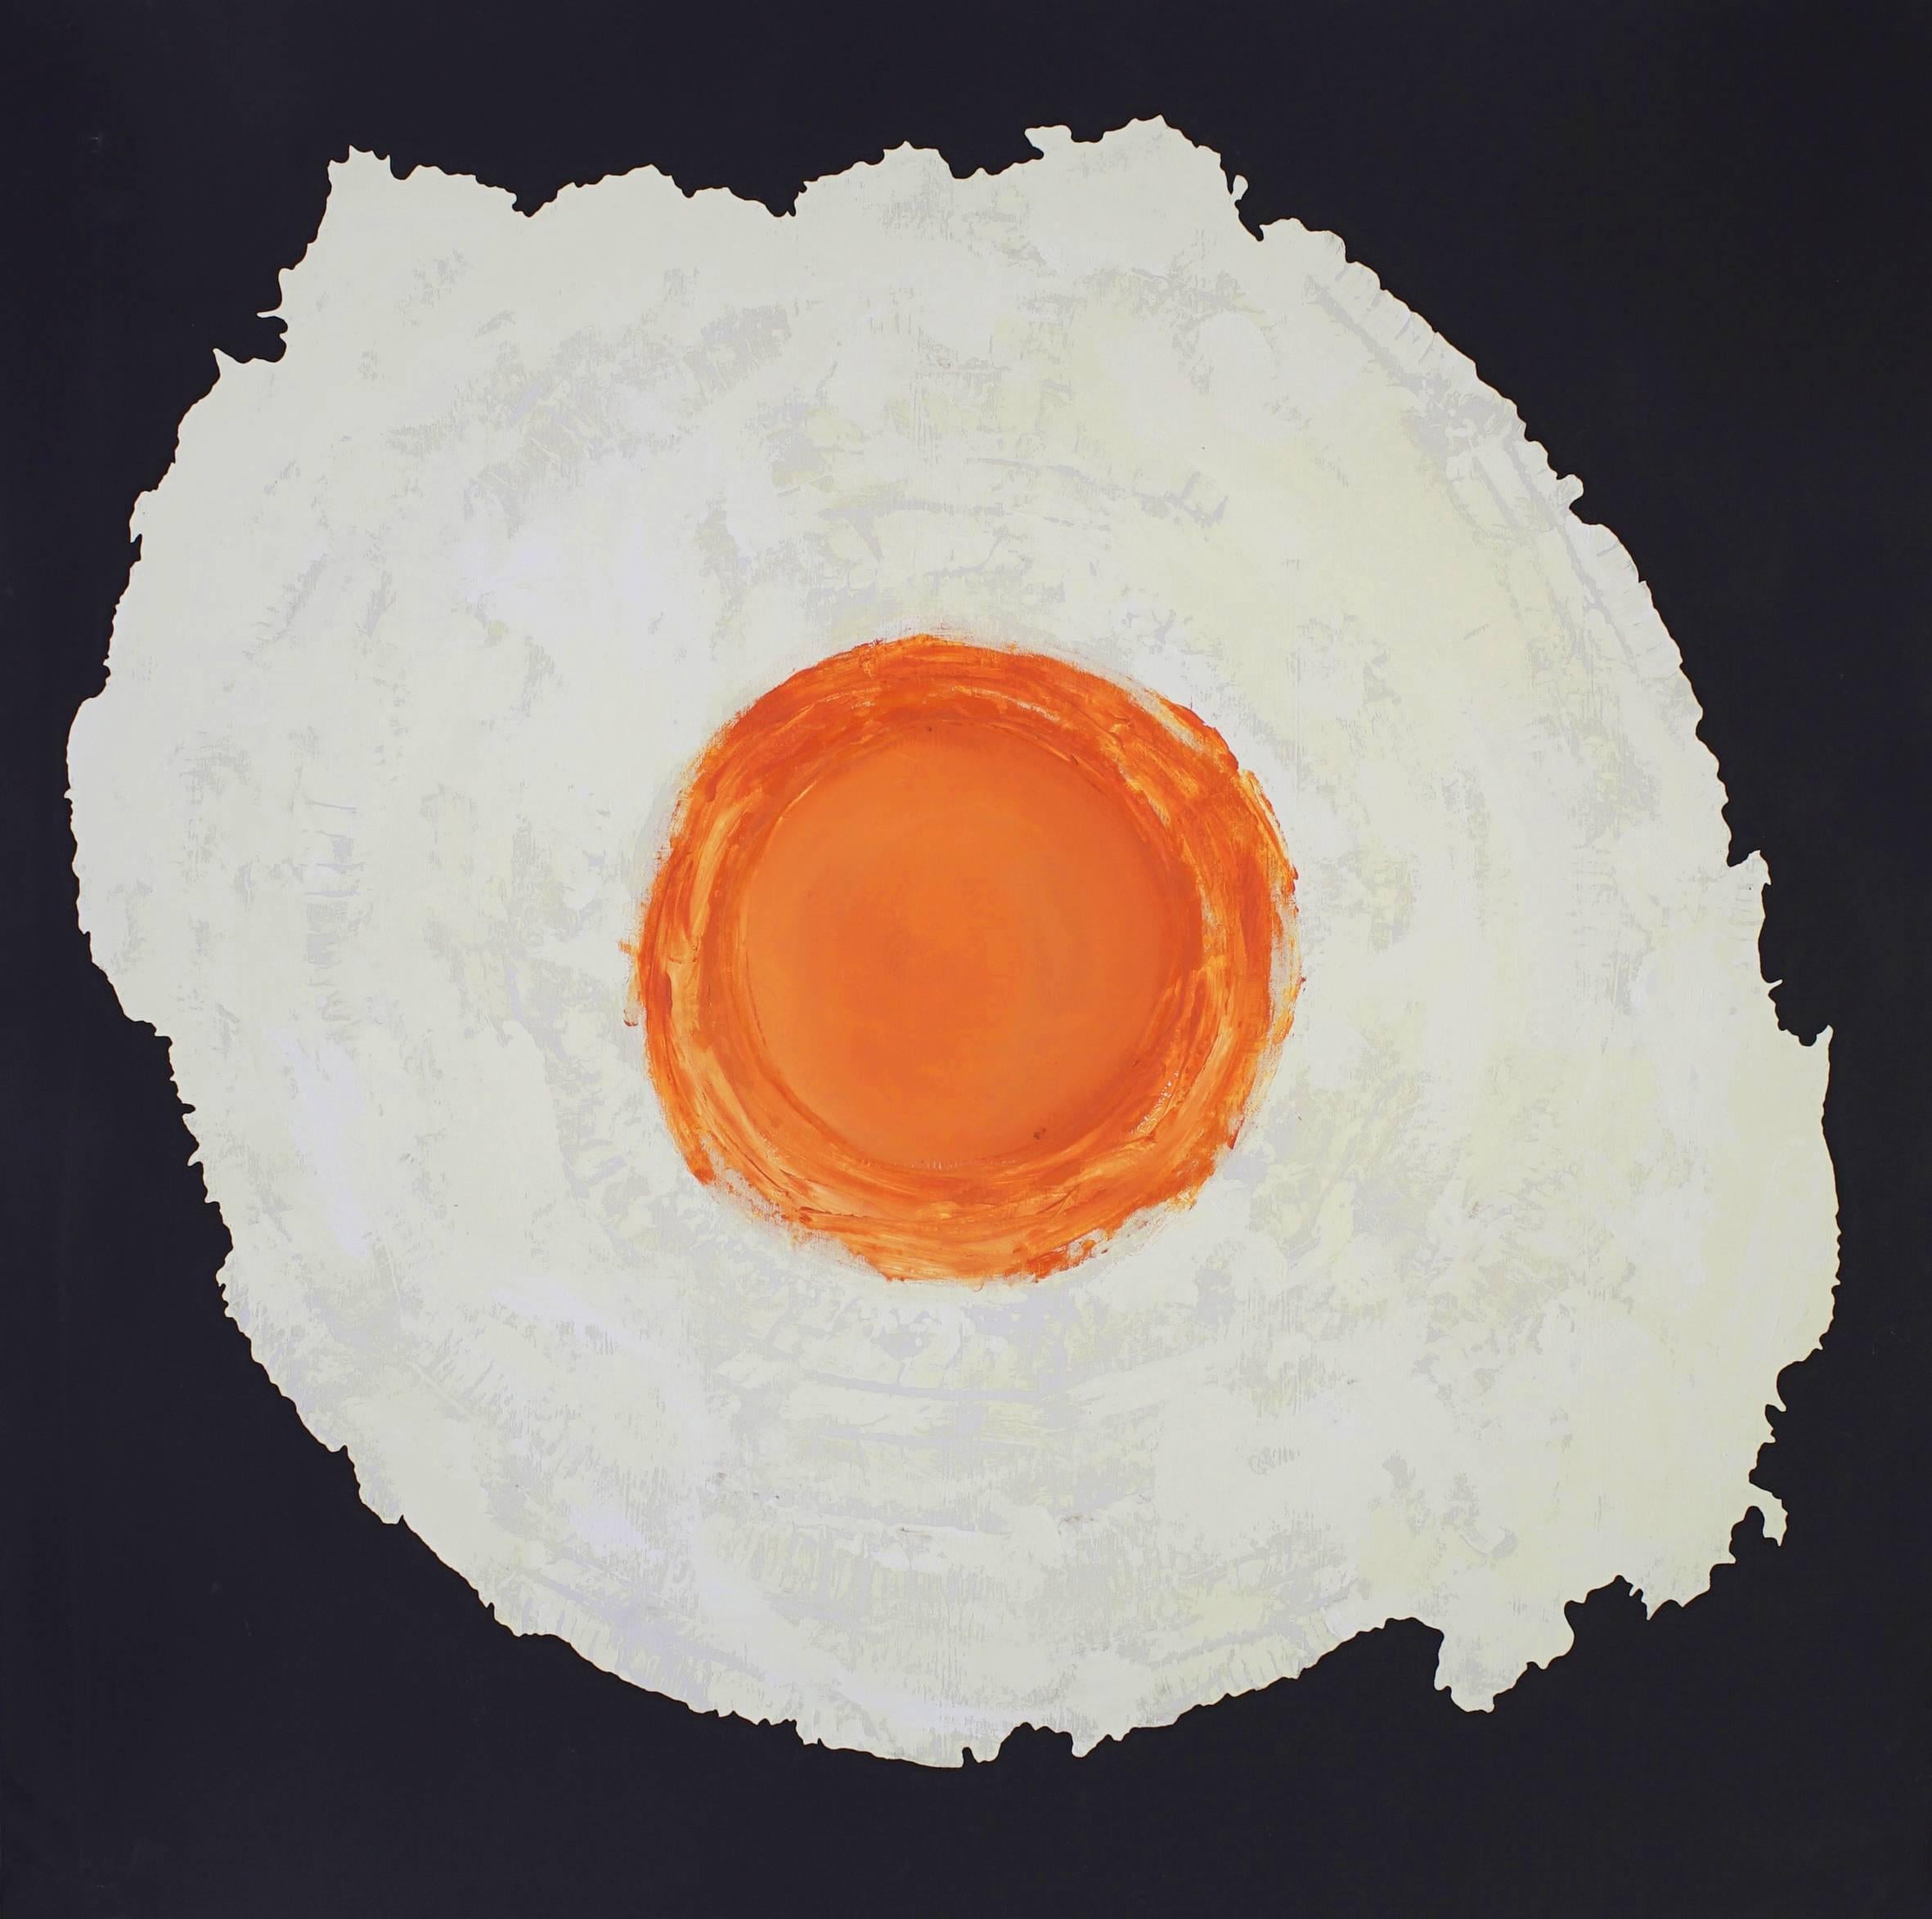 Mattia Novello Figurative Painting - 'Eternal Life' Conceptual Painting Featuring Cracked Egg